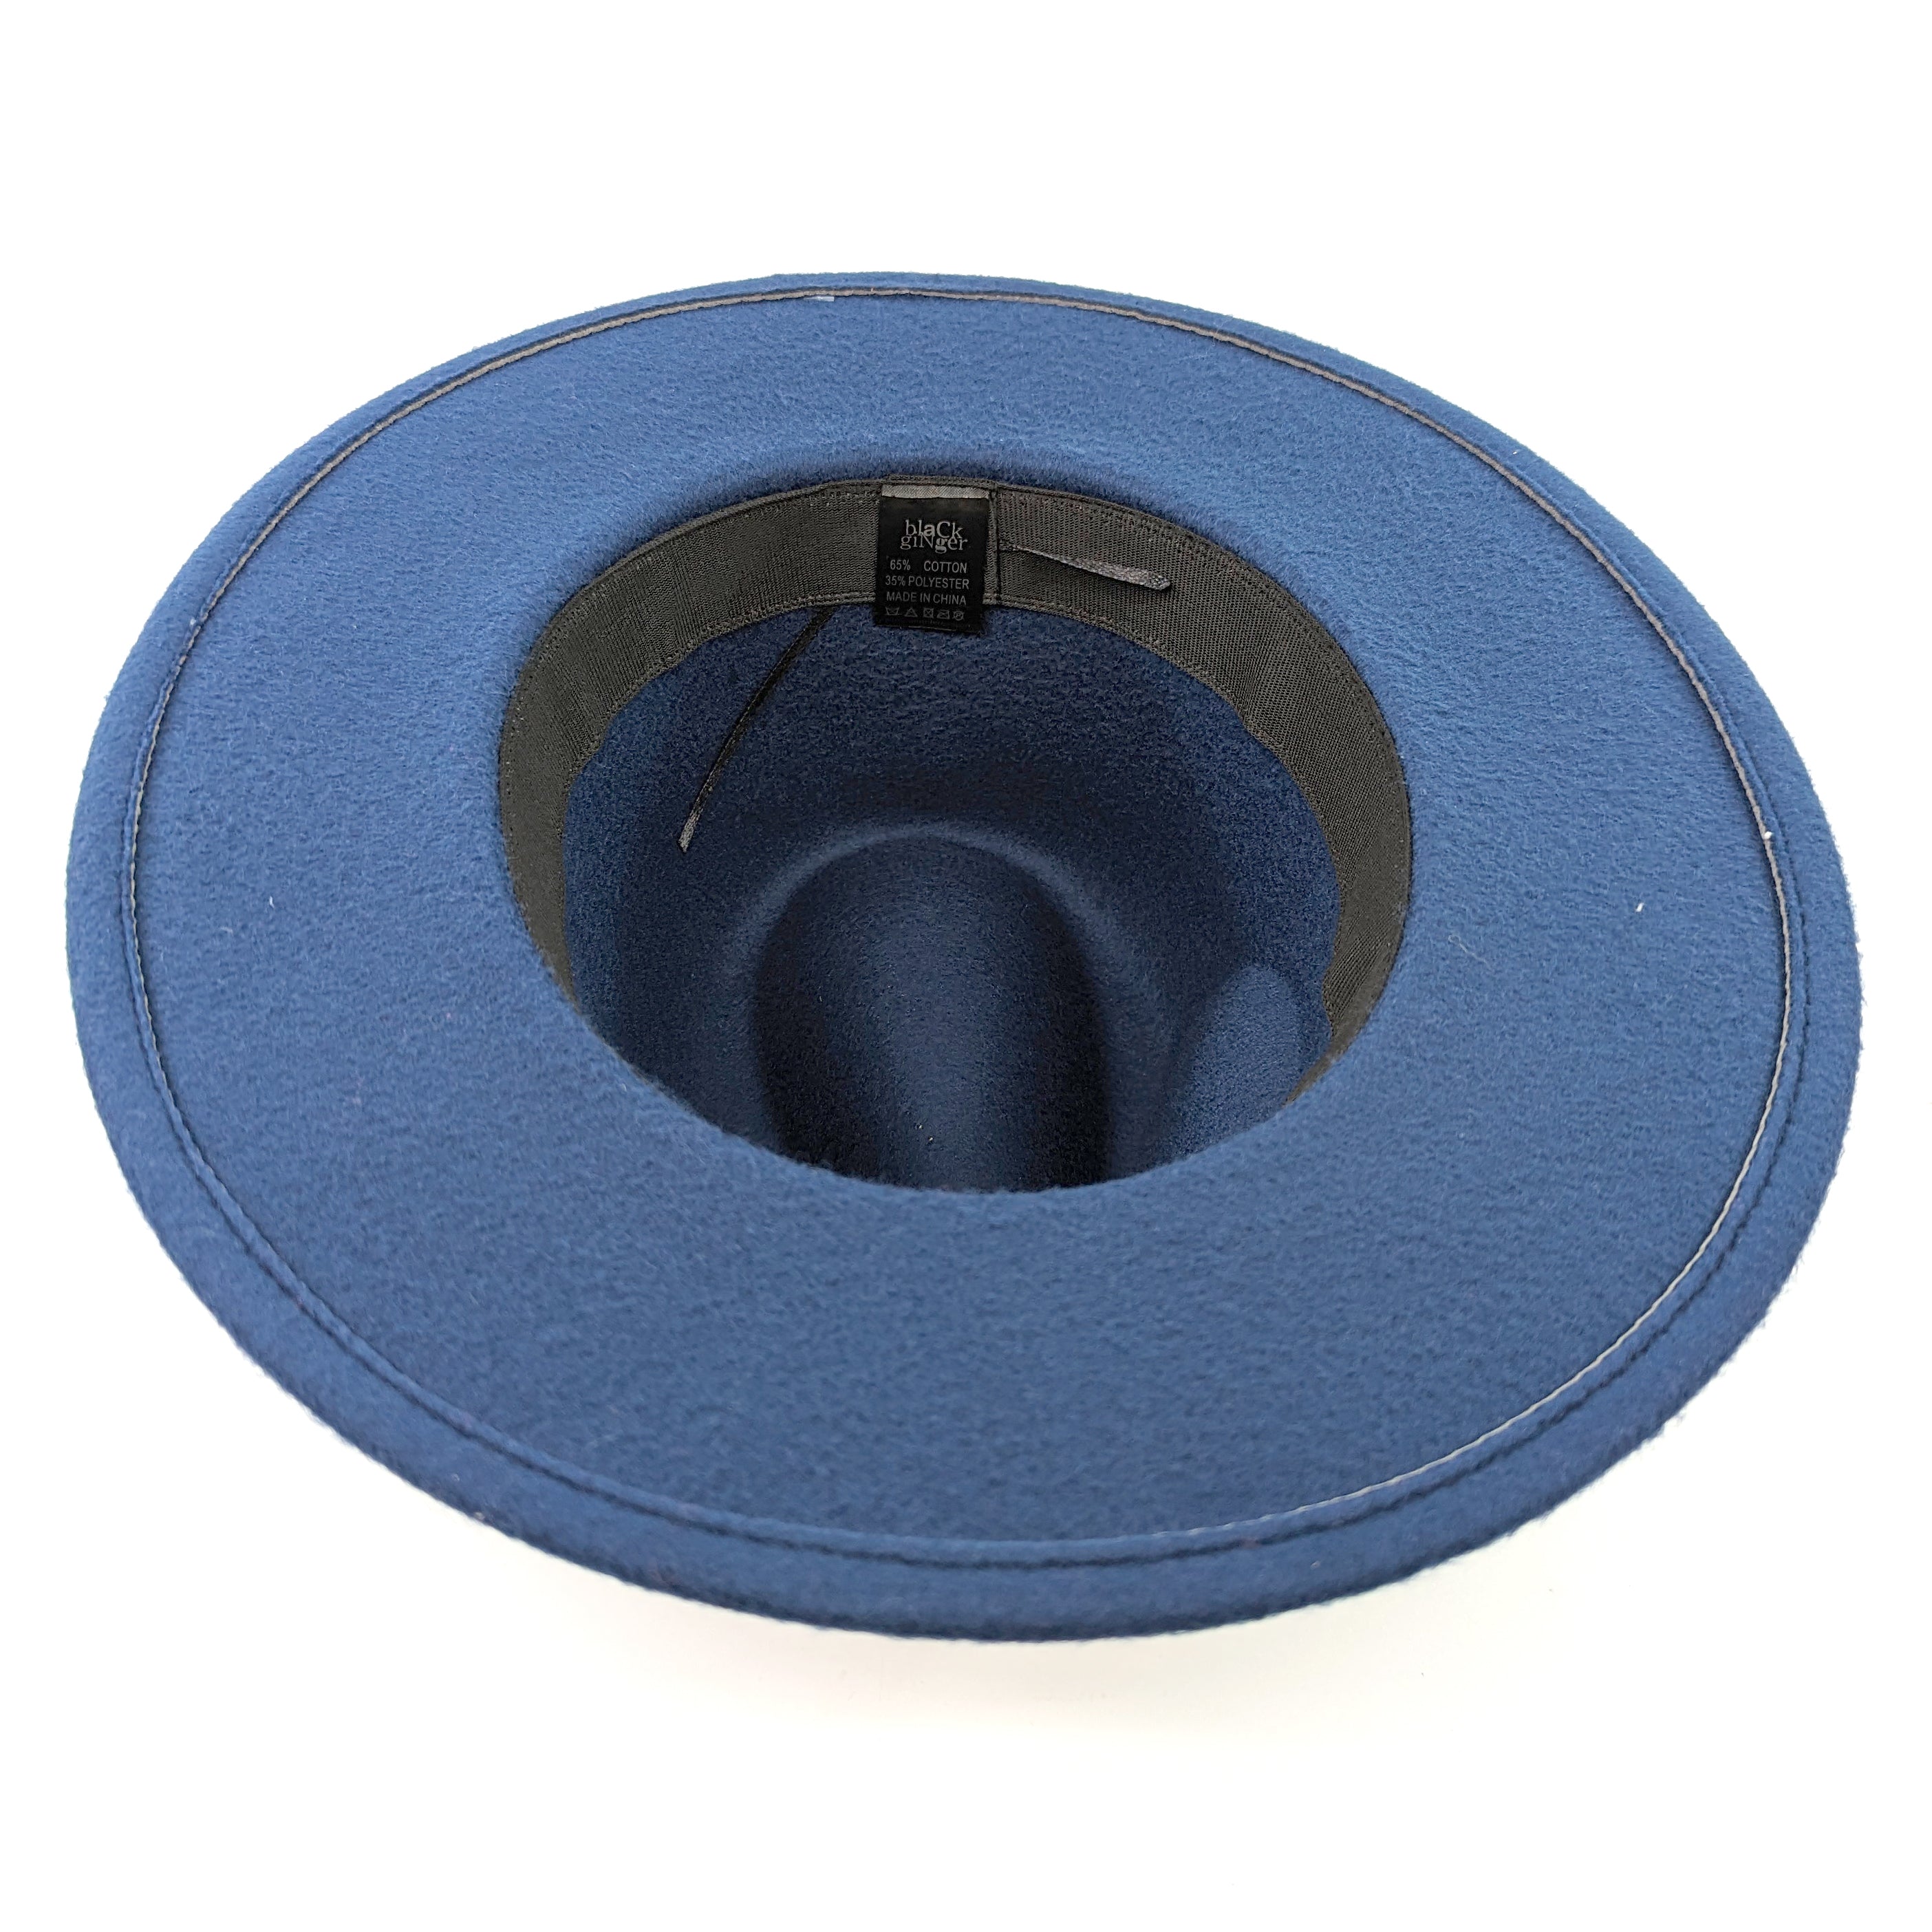 Blue / Royal Blue Fedora Hat